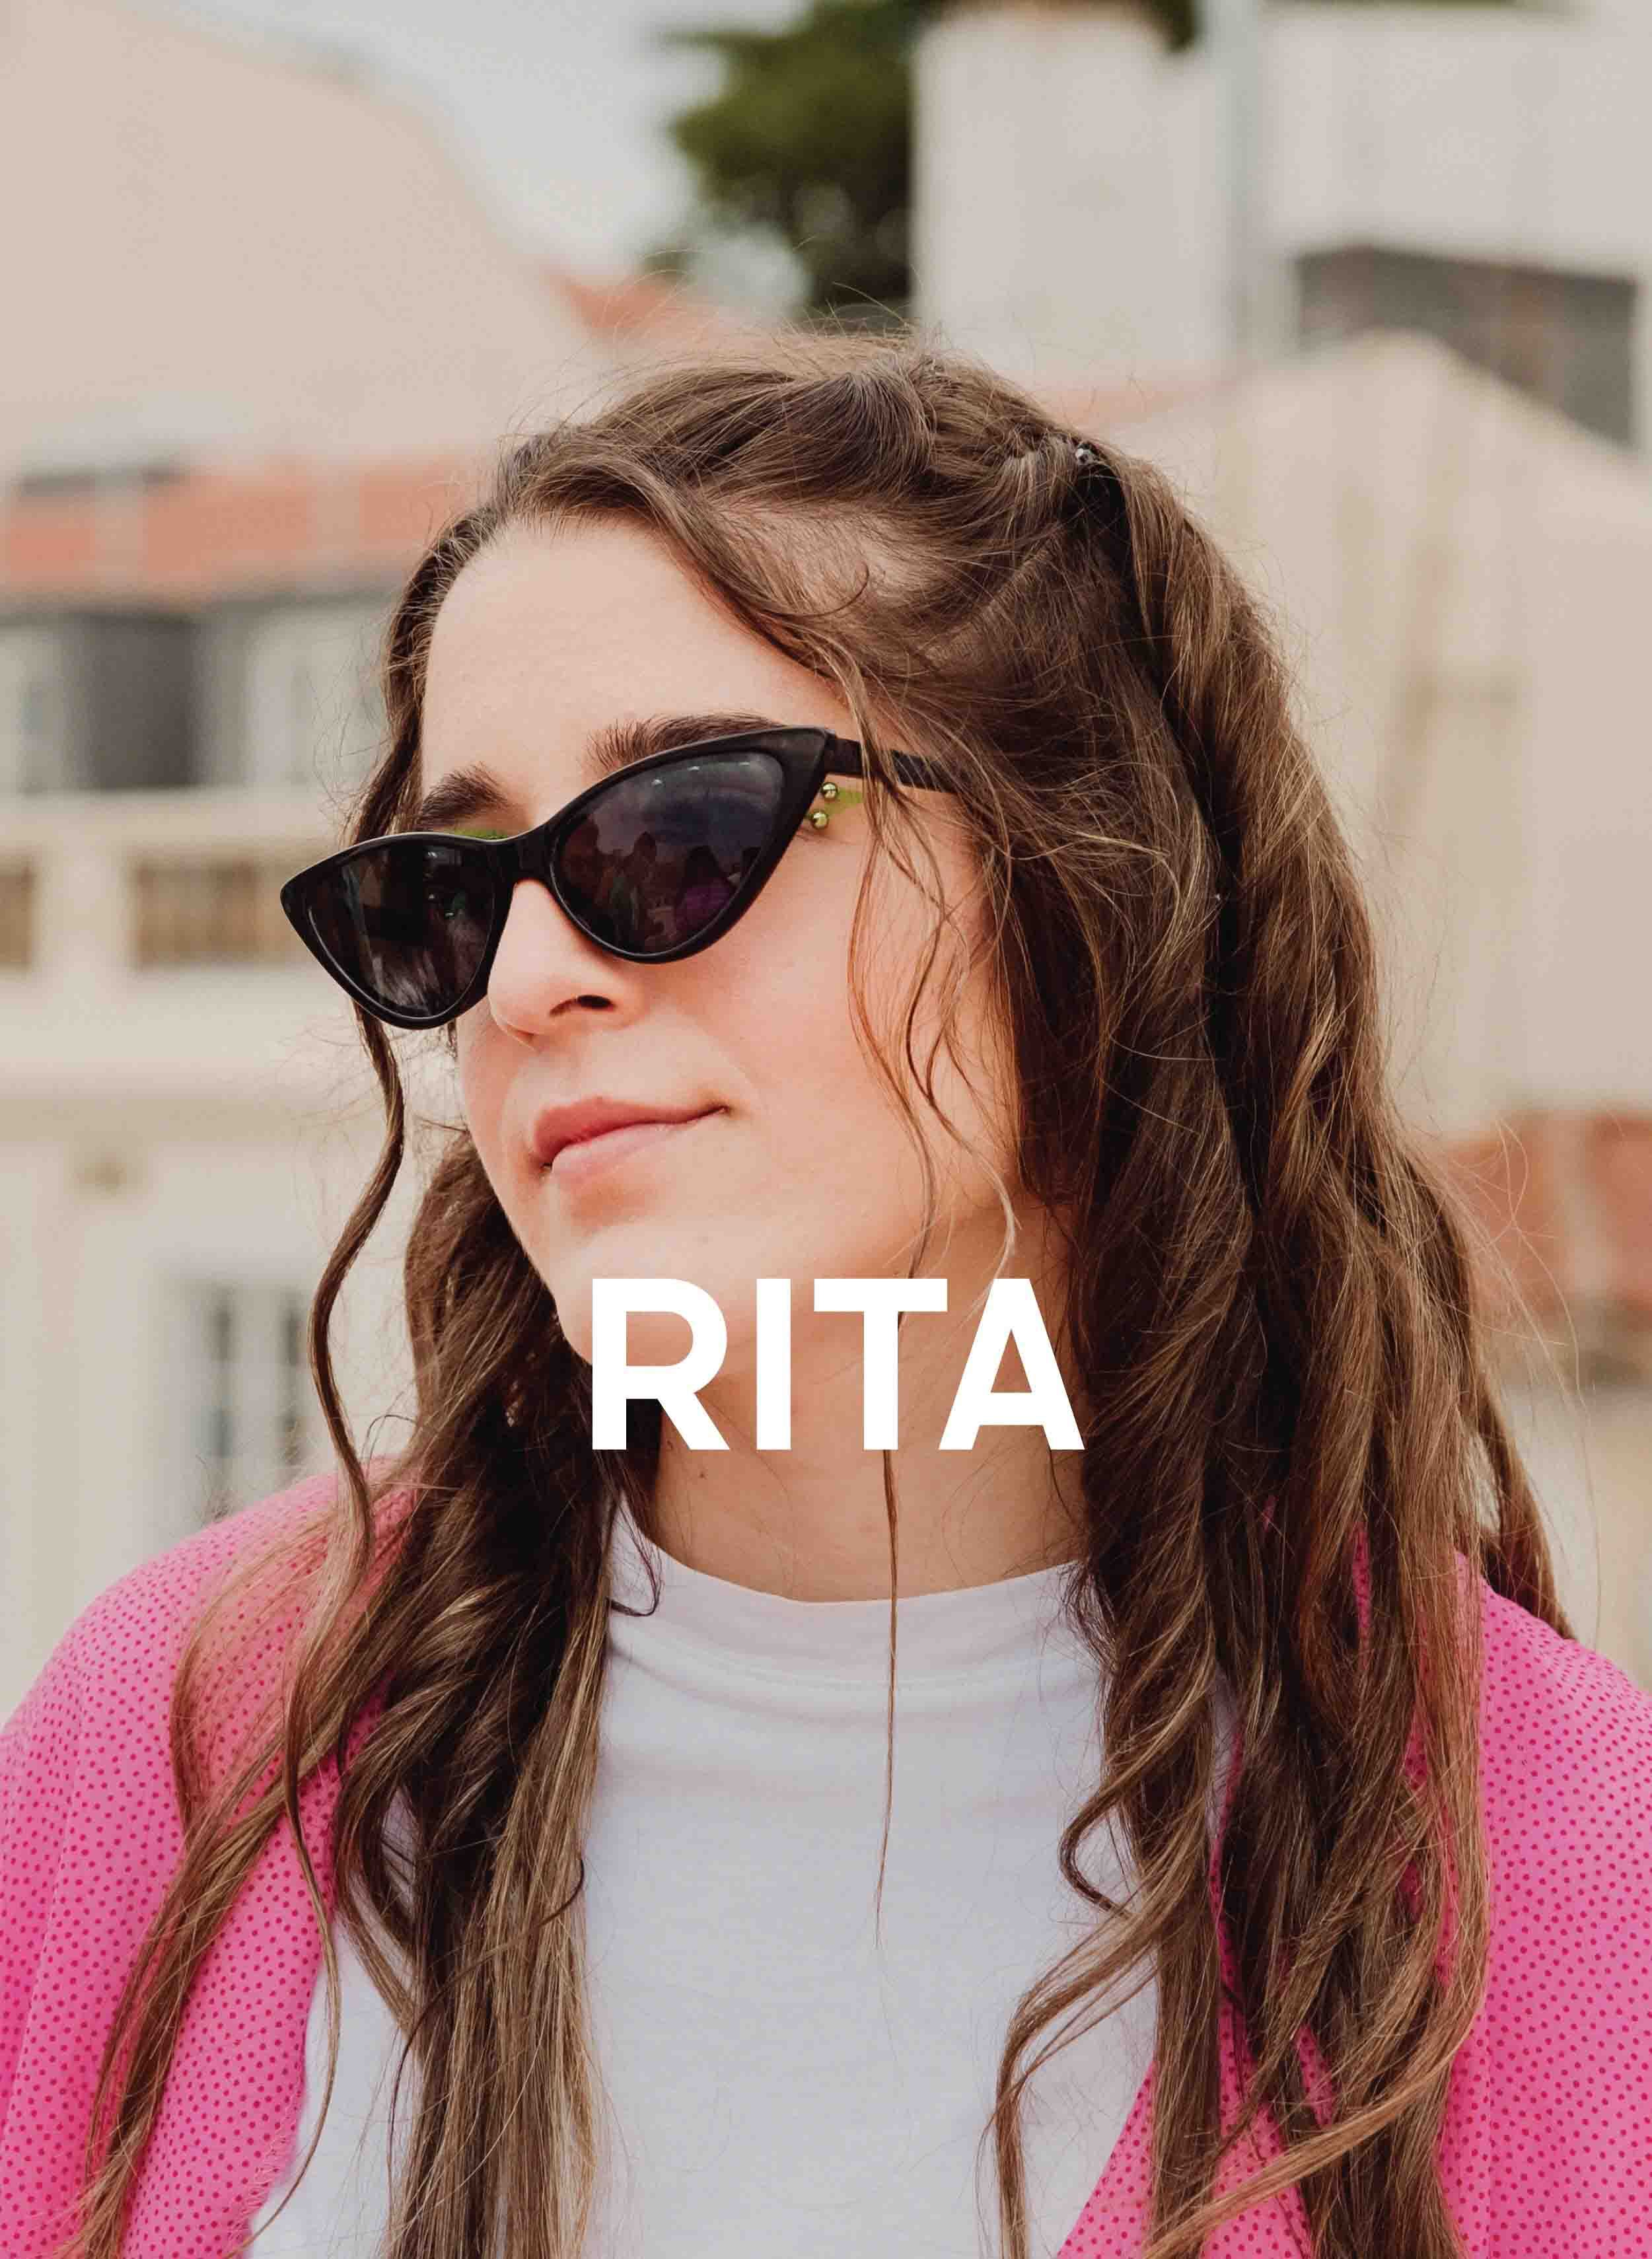 A picture of Rita.